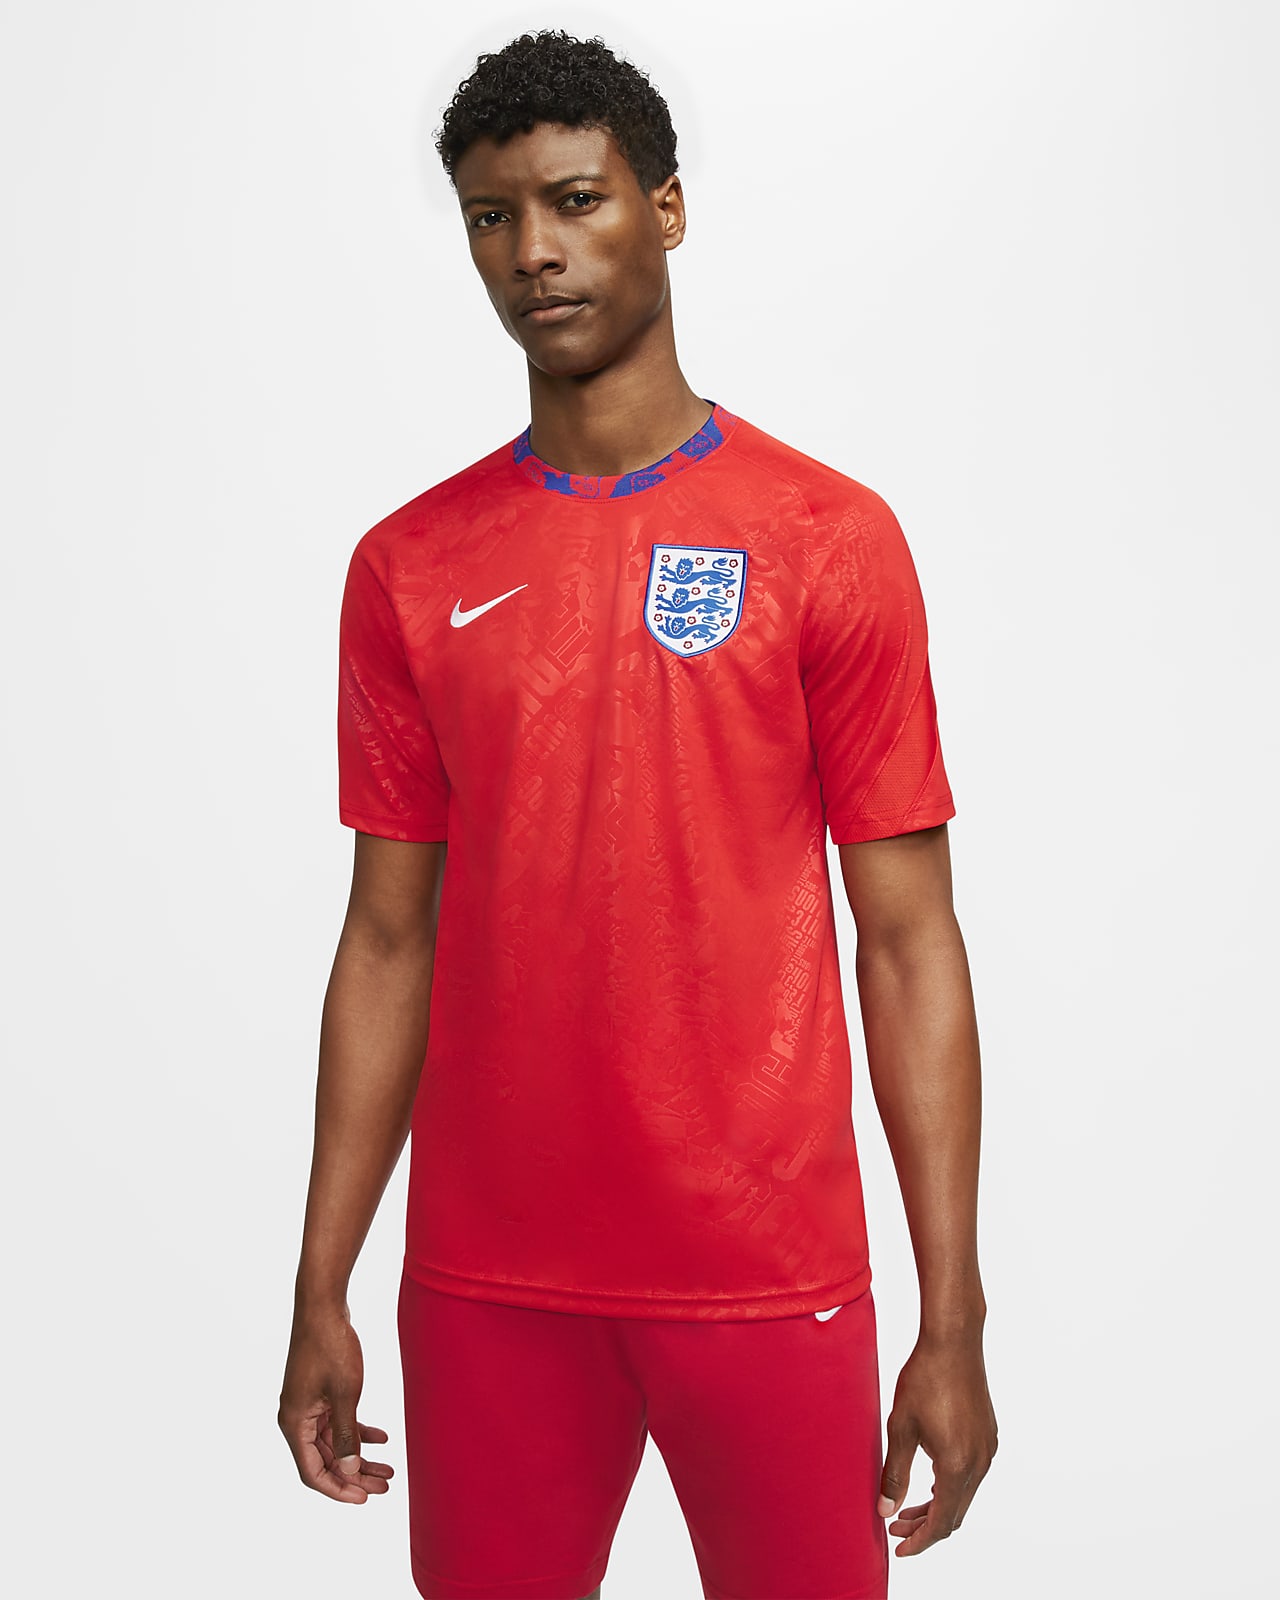 England Men's Short-Sleeve Soccer Top 